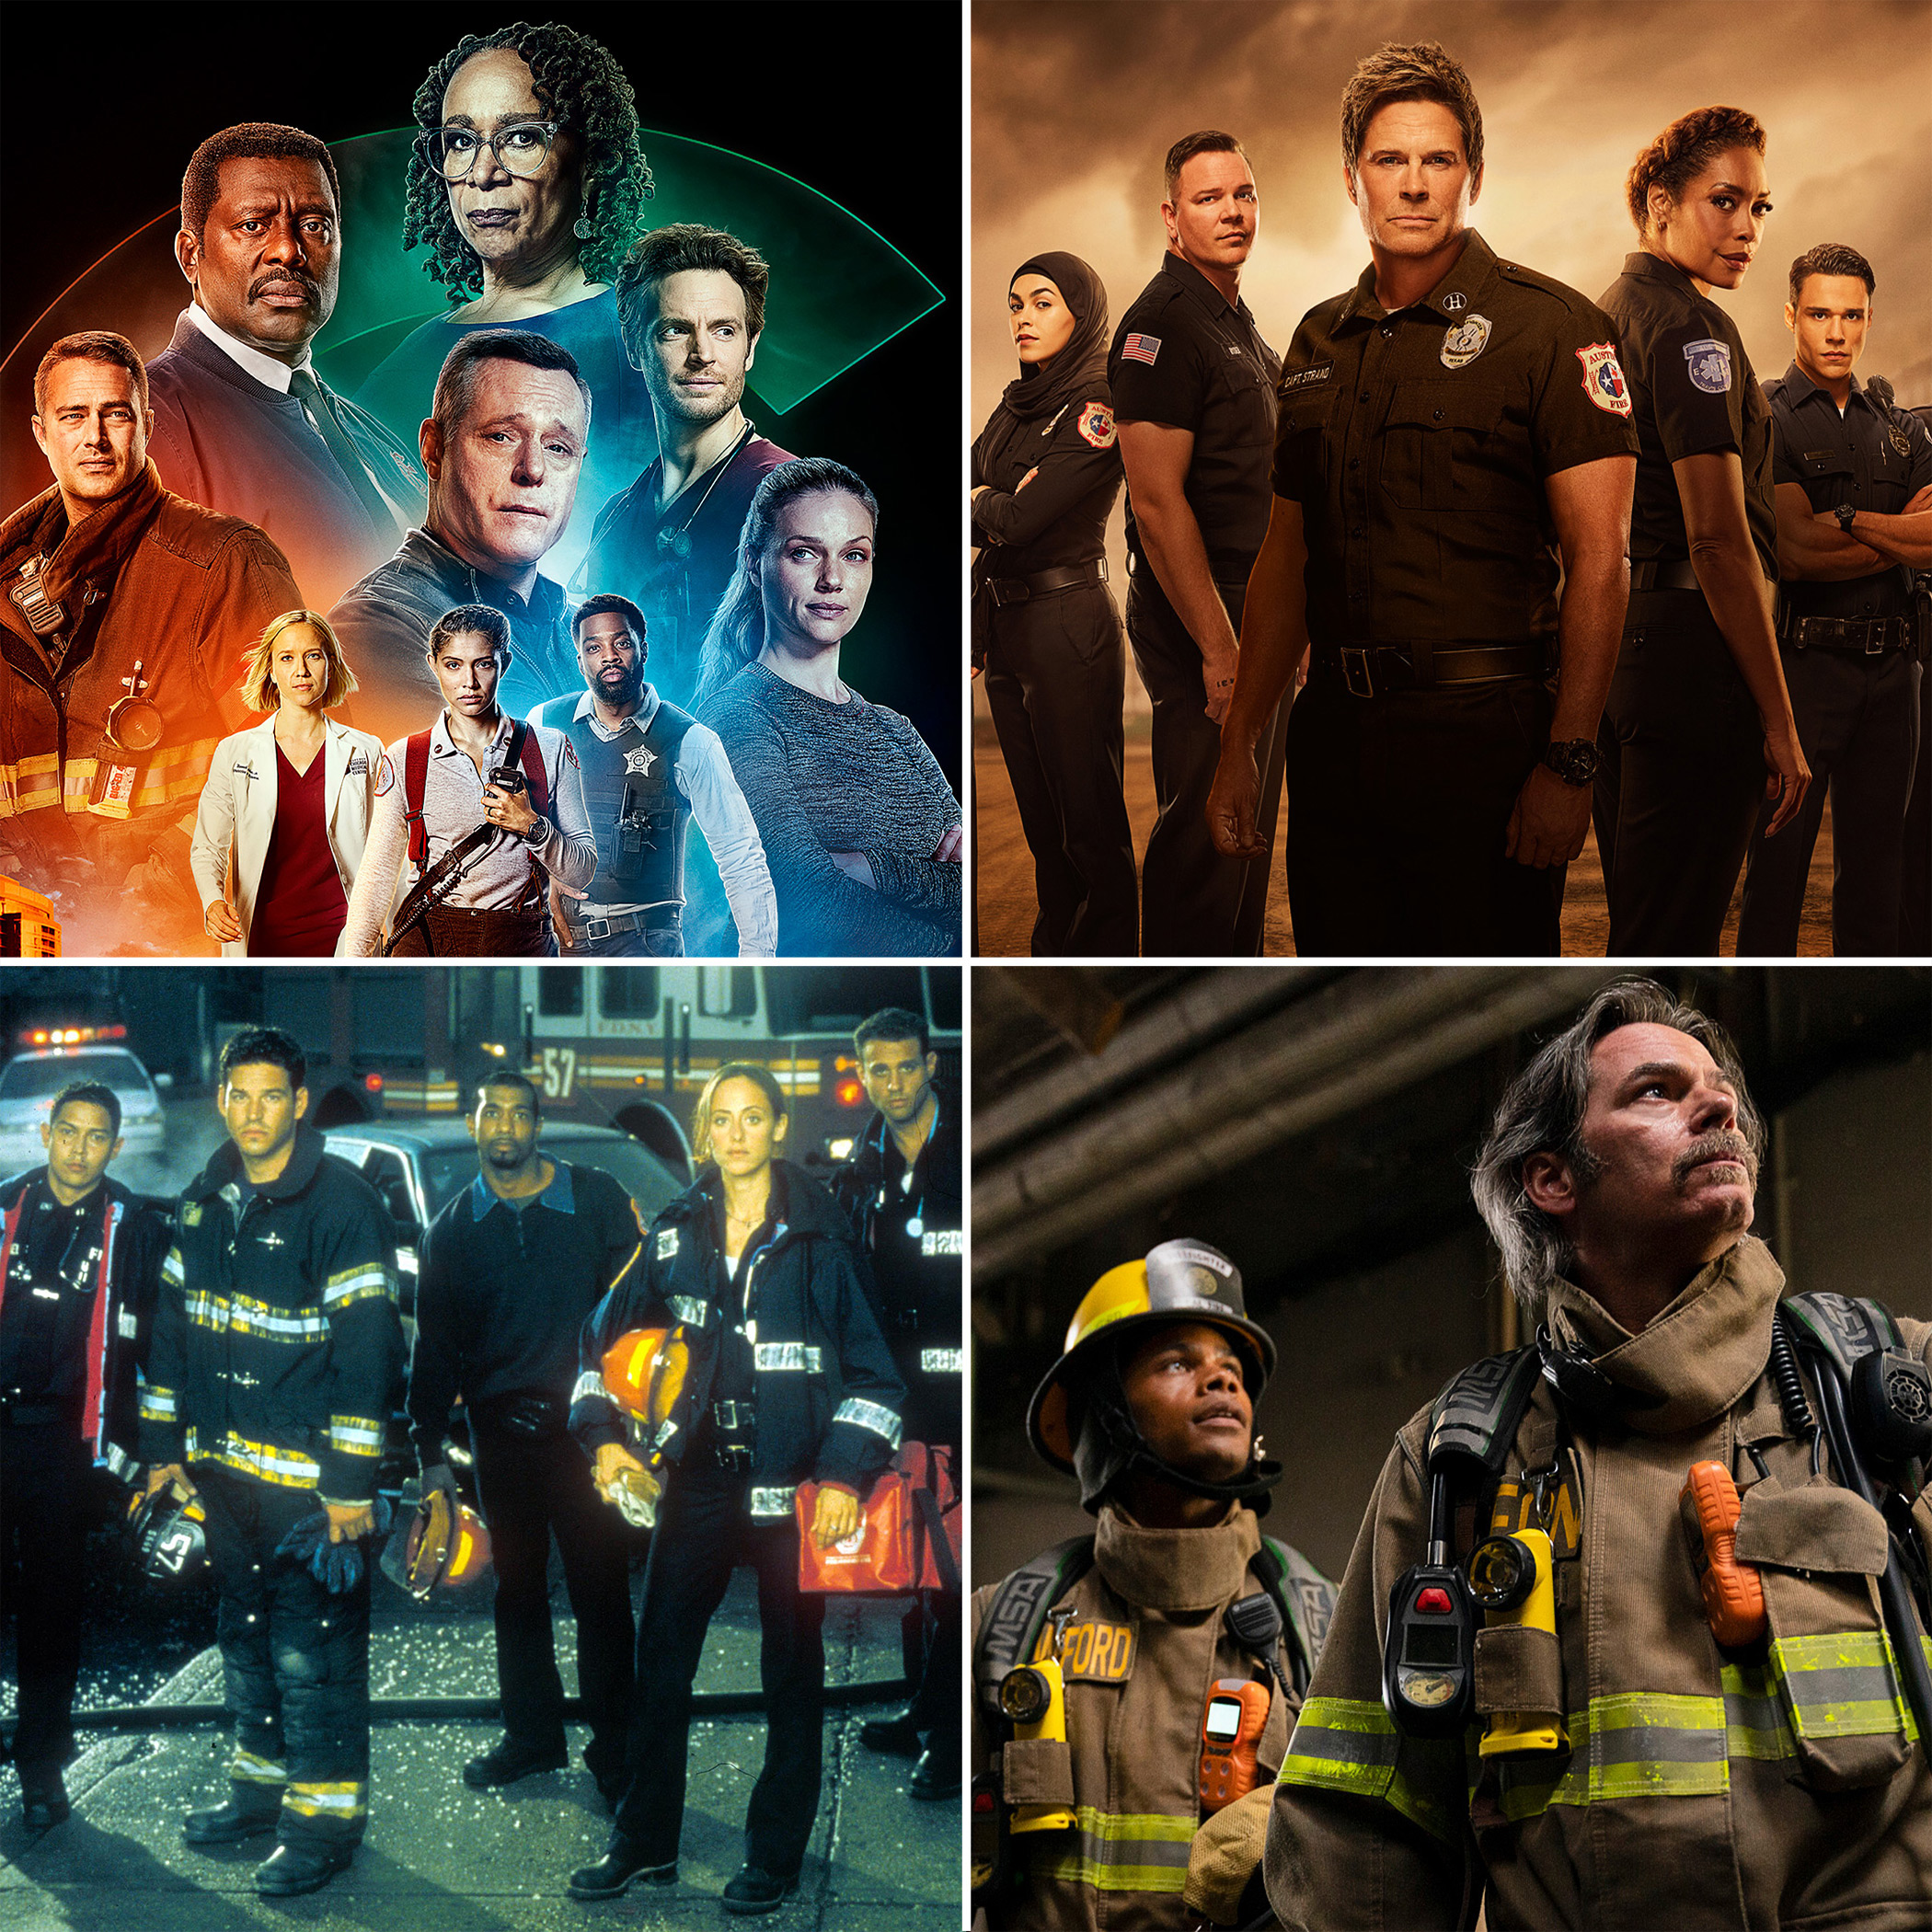 Fire Force (TV Series 2019– ) - News - IMDb